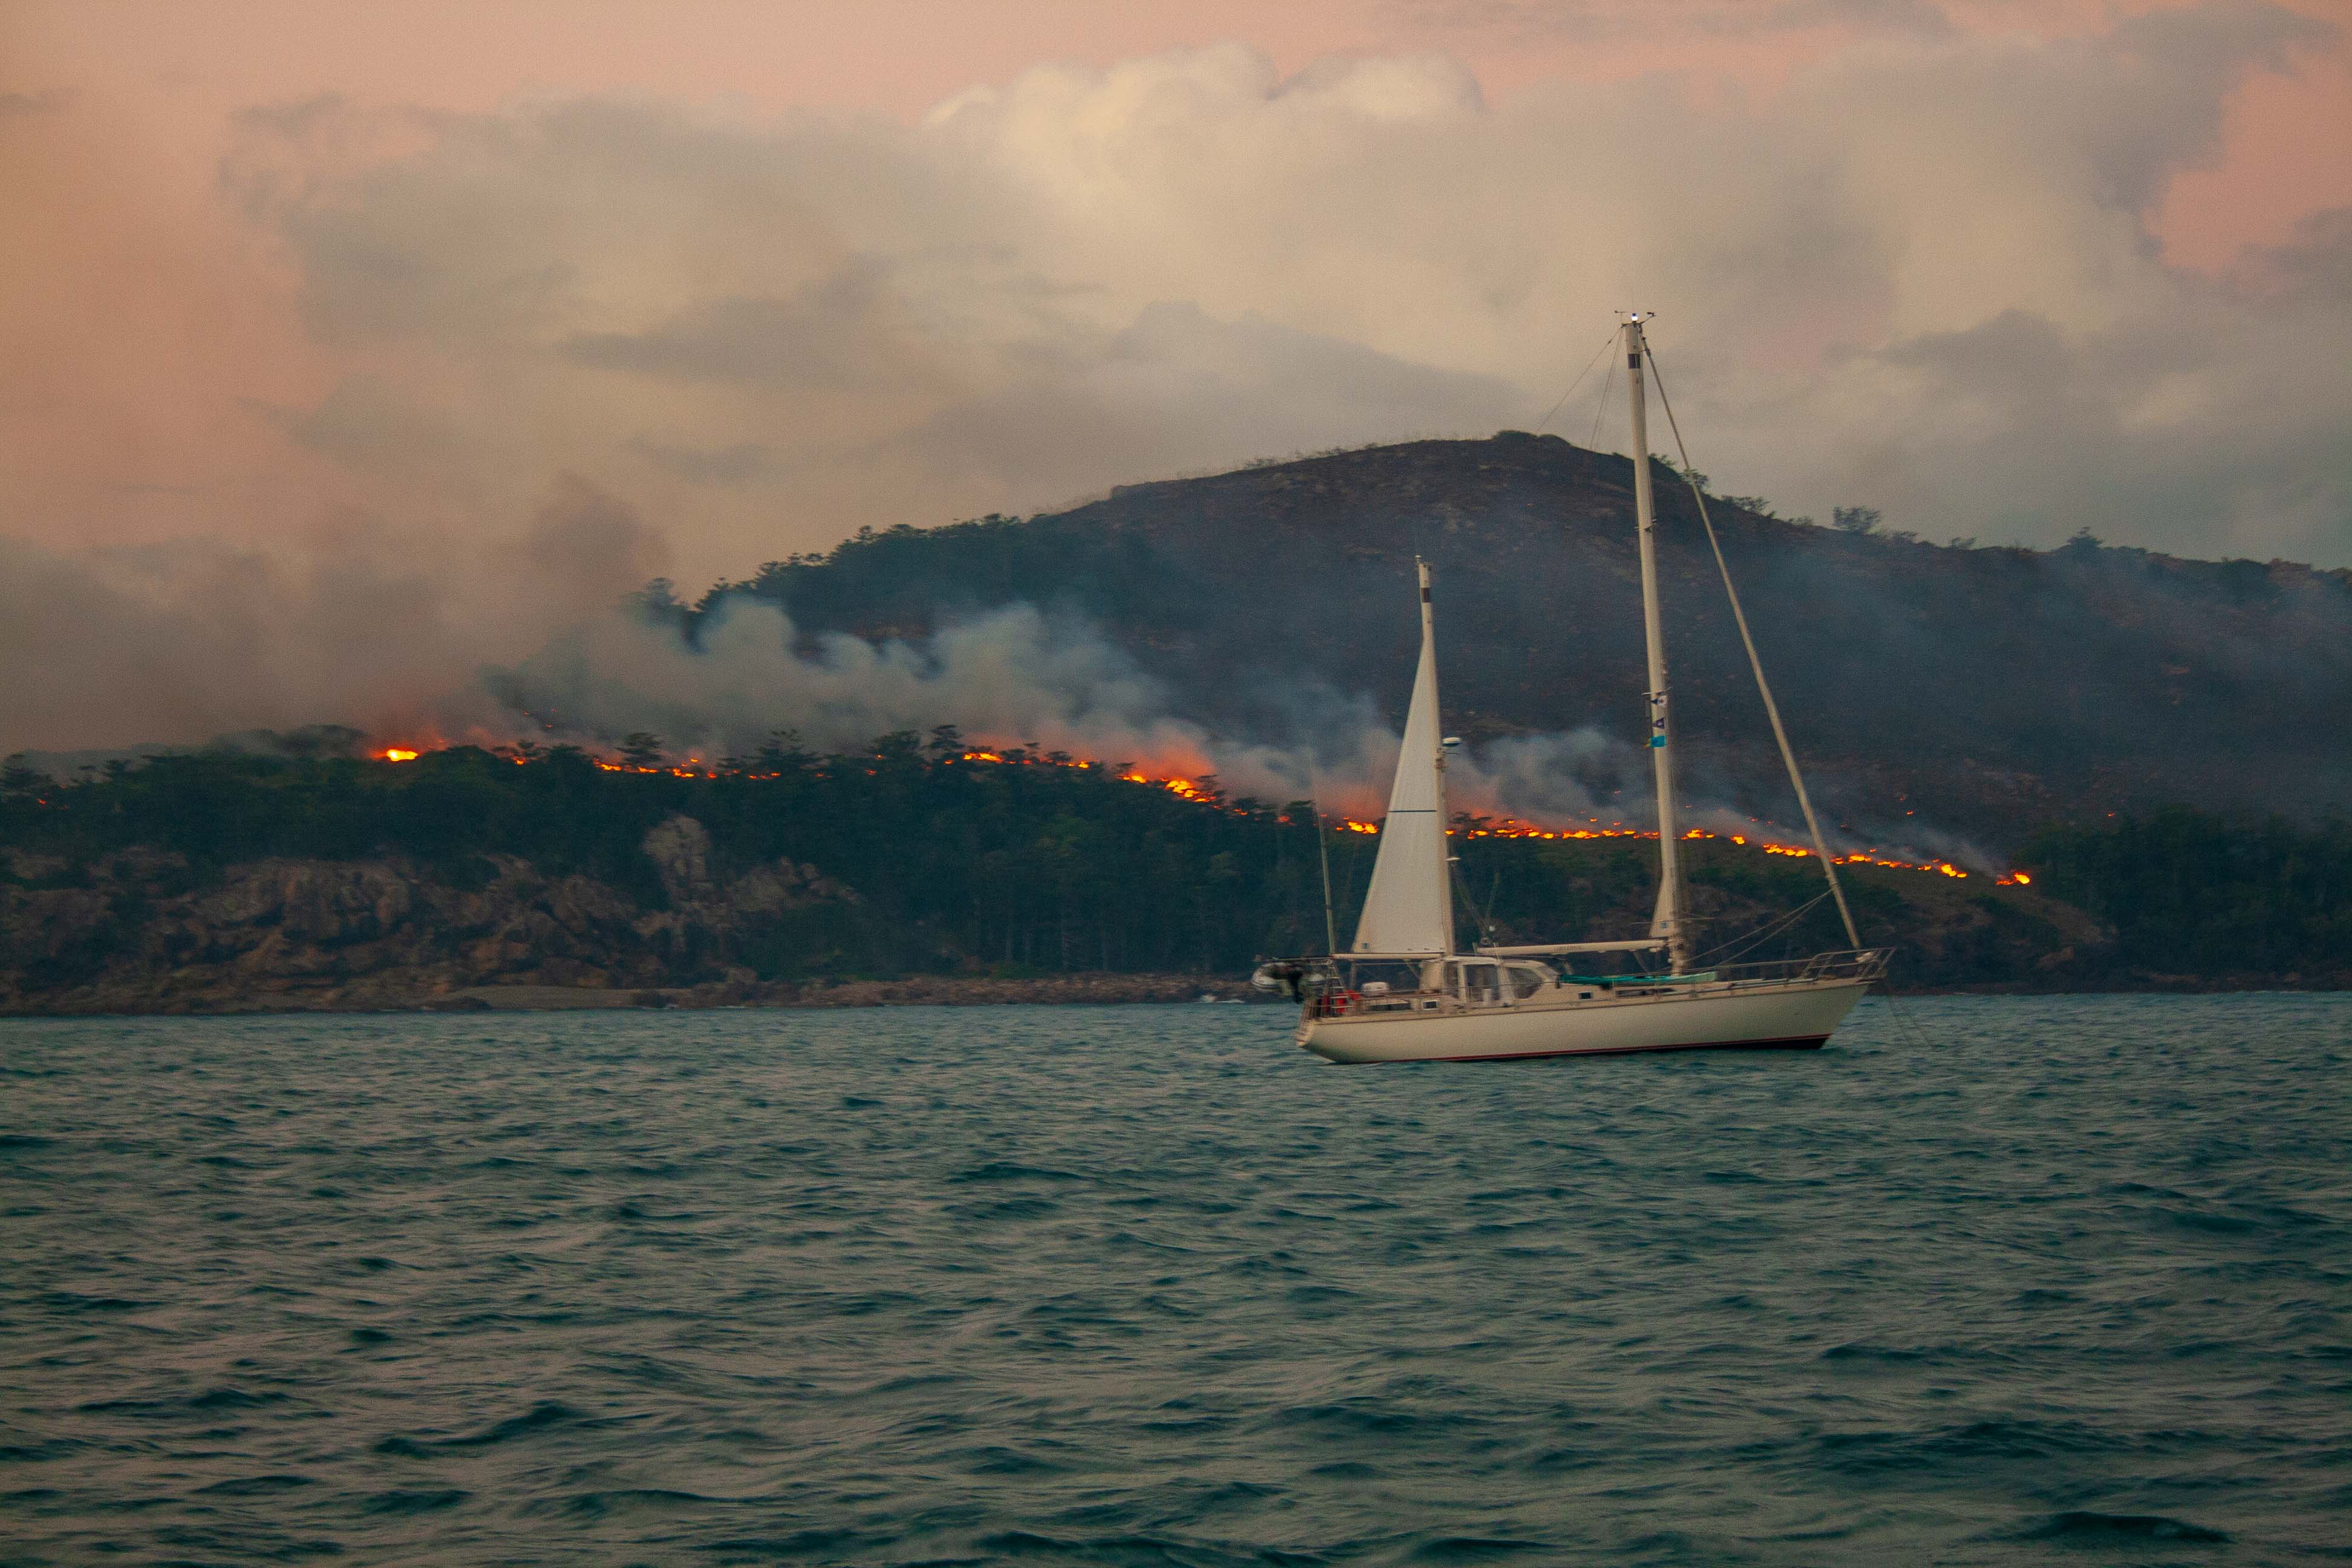 Digby Island anchorage on fire.